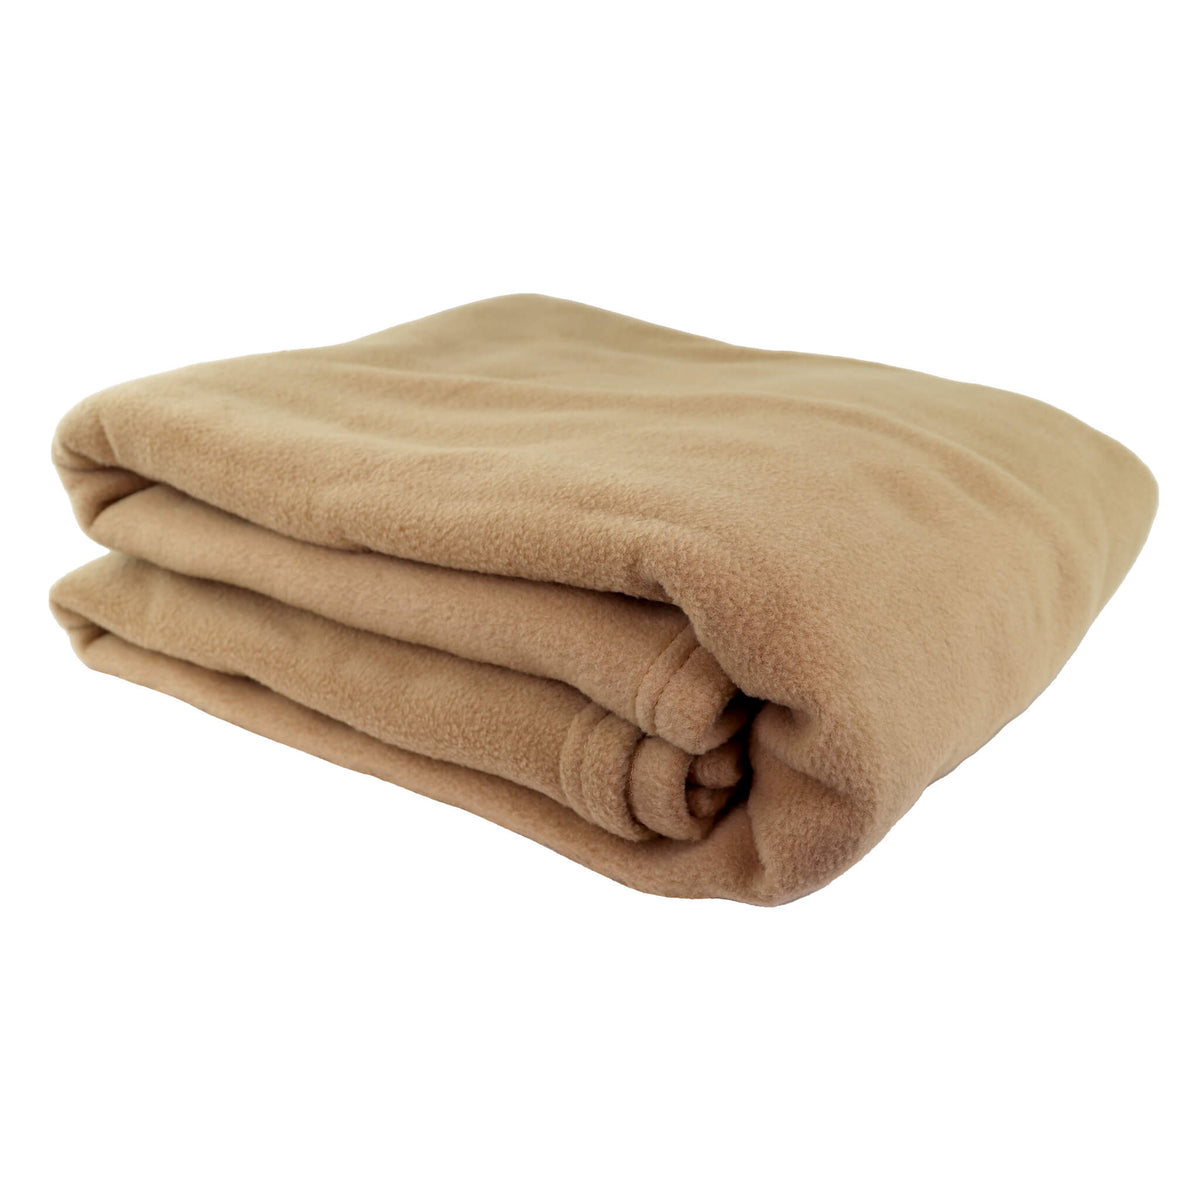 Buy Toasty Blanket Polar Fleece Throw Assorted online at countdown